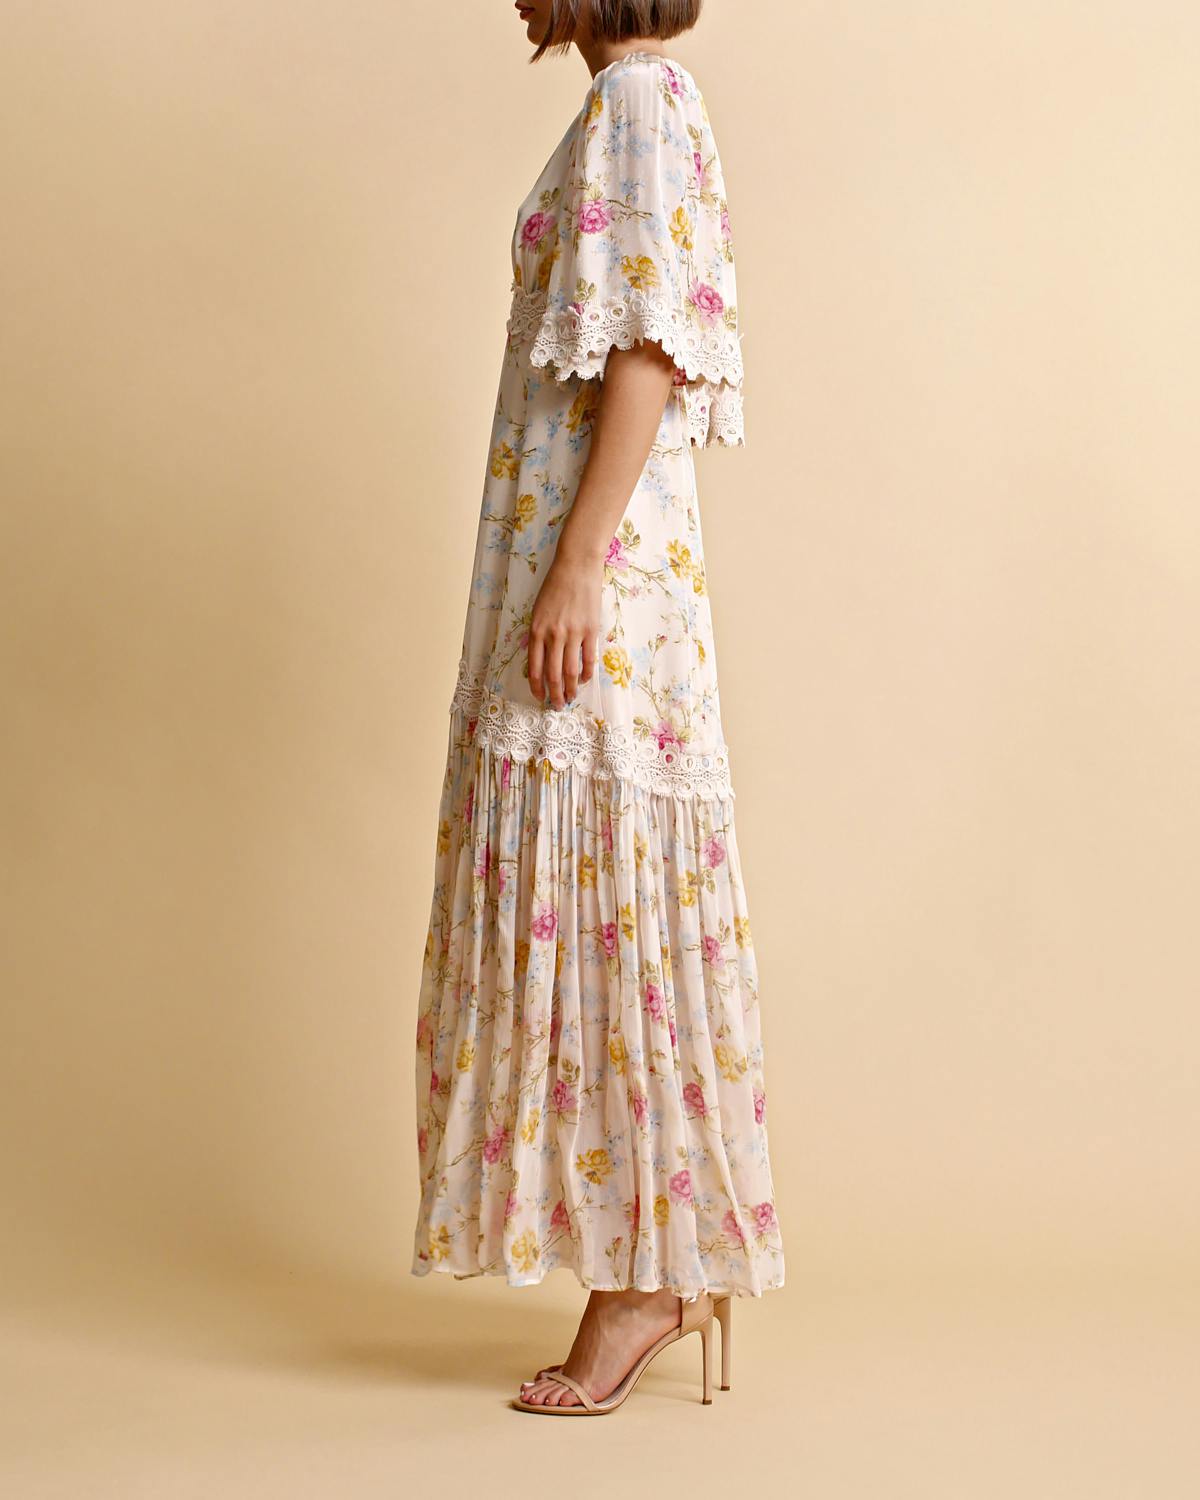 Satin Embroidery Dress, Daylight Roses. Image #3